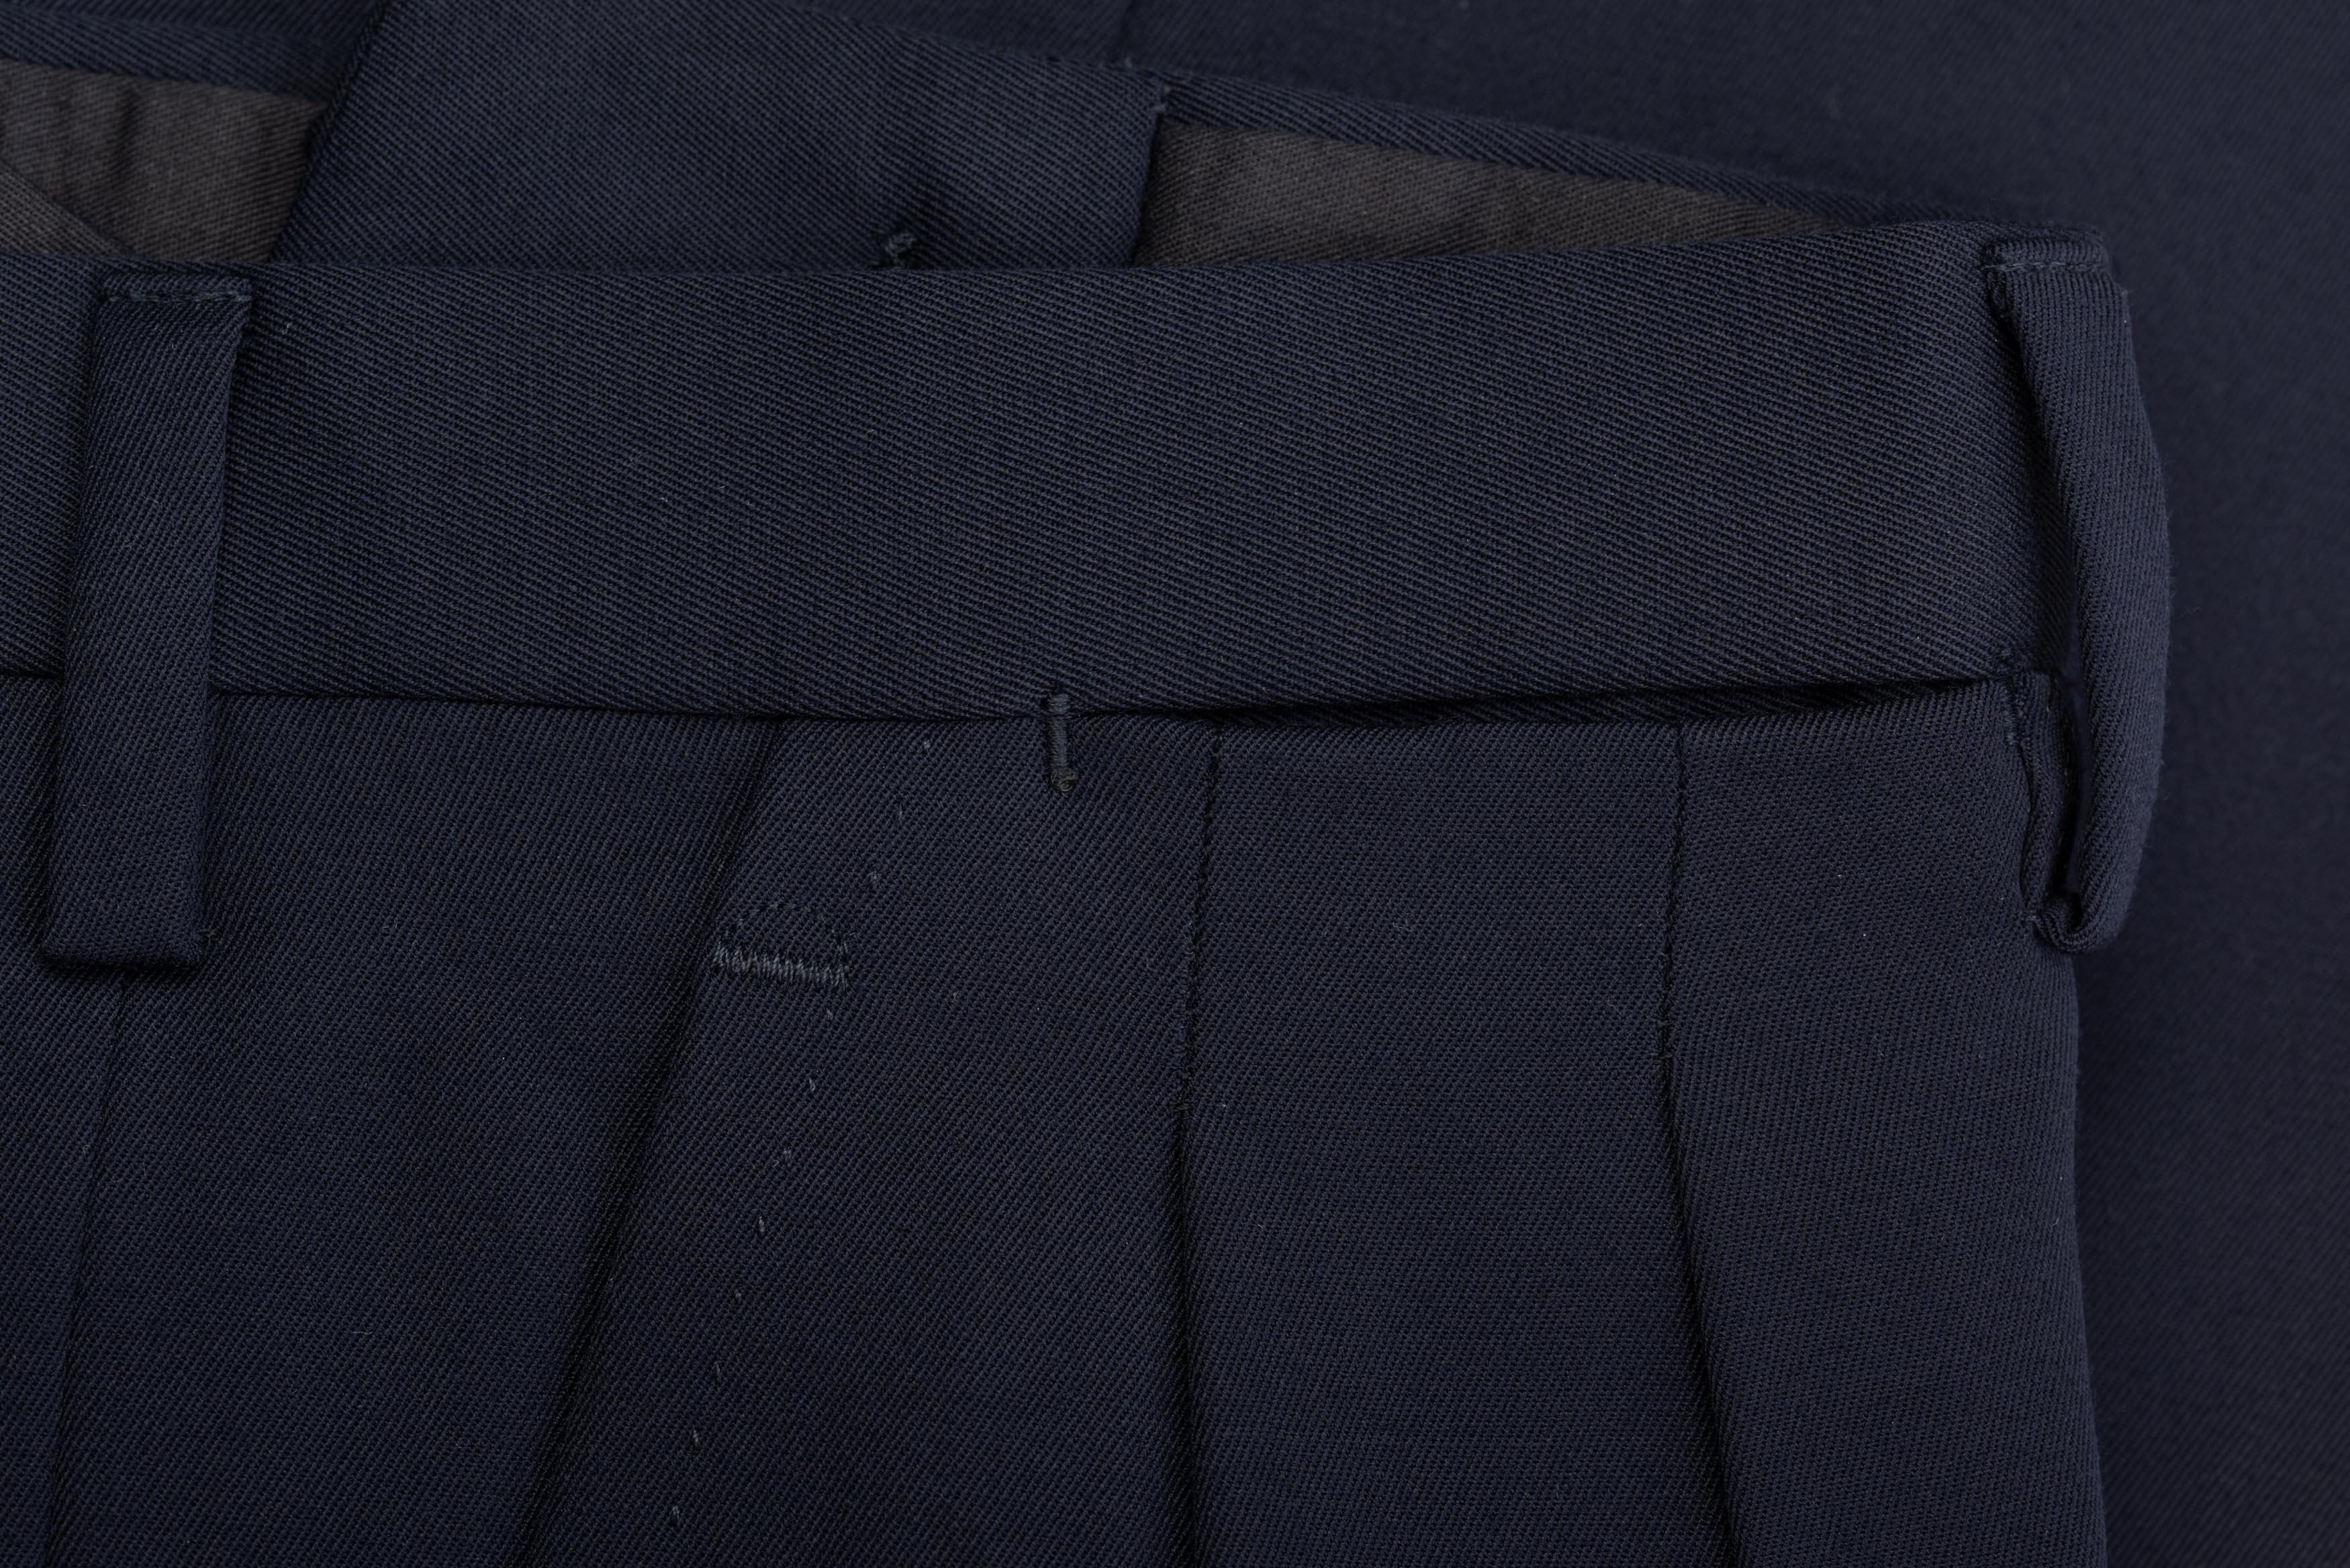 D'AVENZA Roma Handmade Navy Blue Wool DP Dress Pants EU 48 NEW US 32